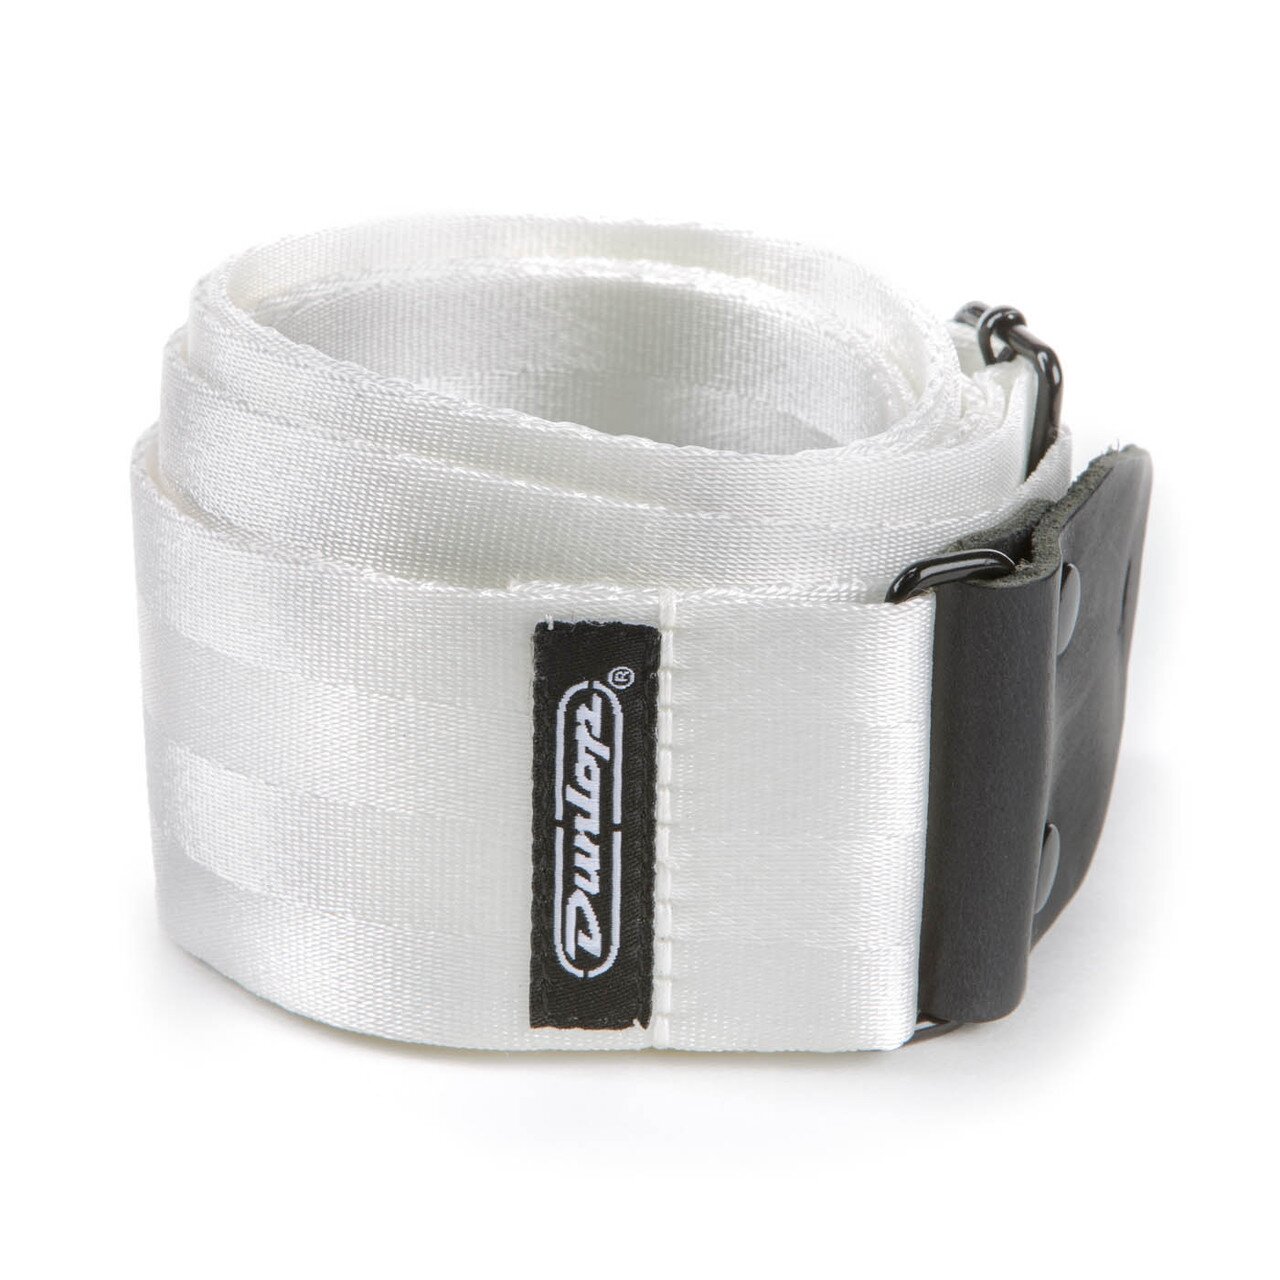 Dunlop Strap, Deluxe Seatbelt Series - white : photo 1